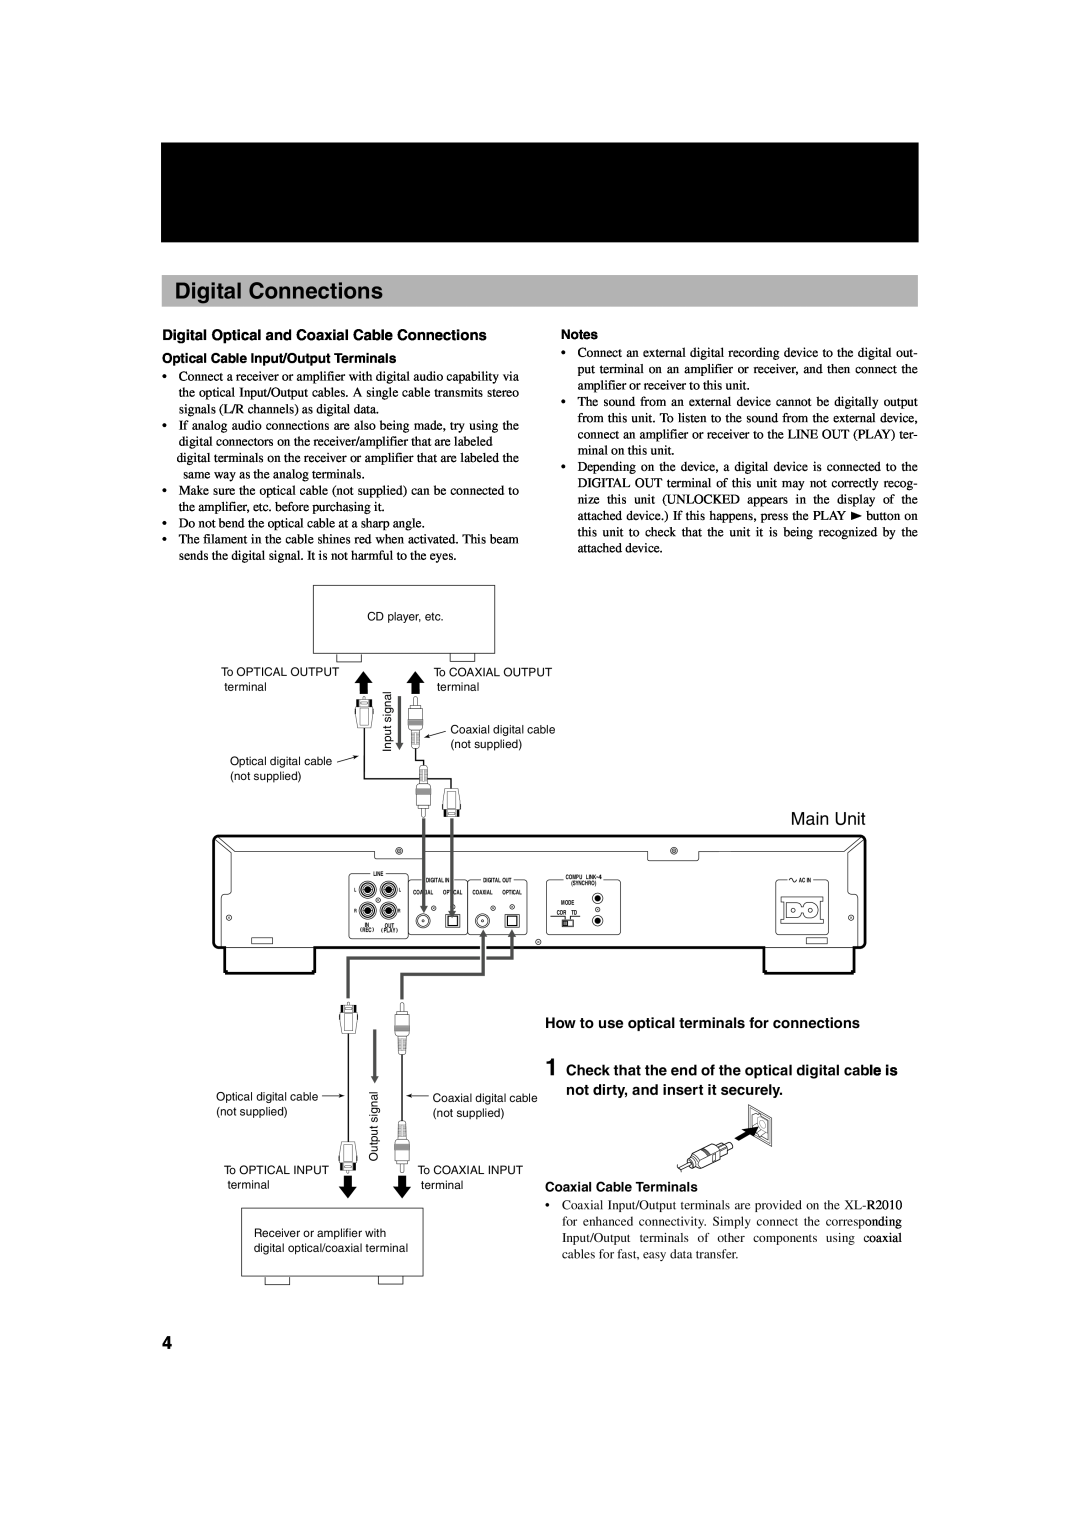 JVC XL-R2010BK manual Digital Connections, Main Unit, Optical Cable Input/Output Terminals, Coaxial Cable Terminals 